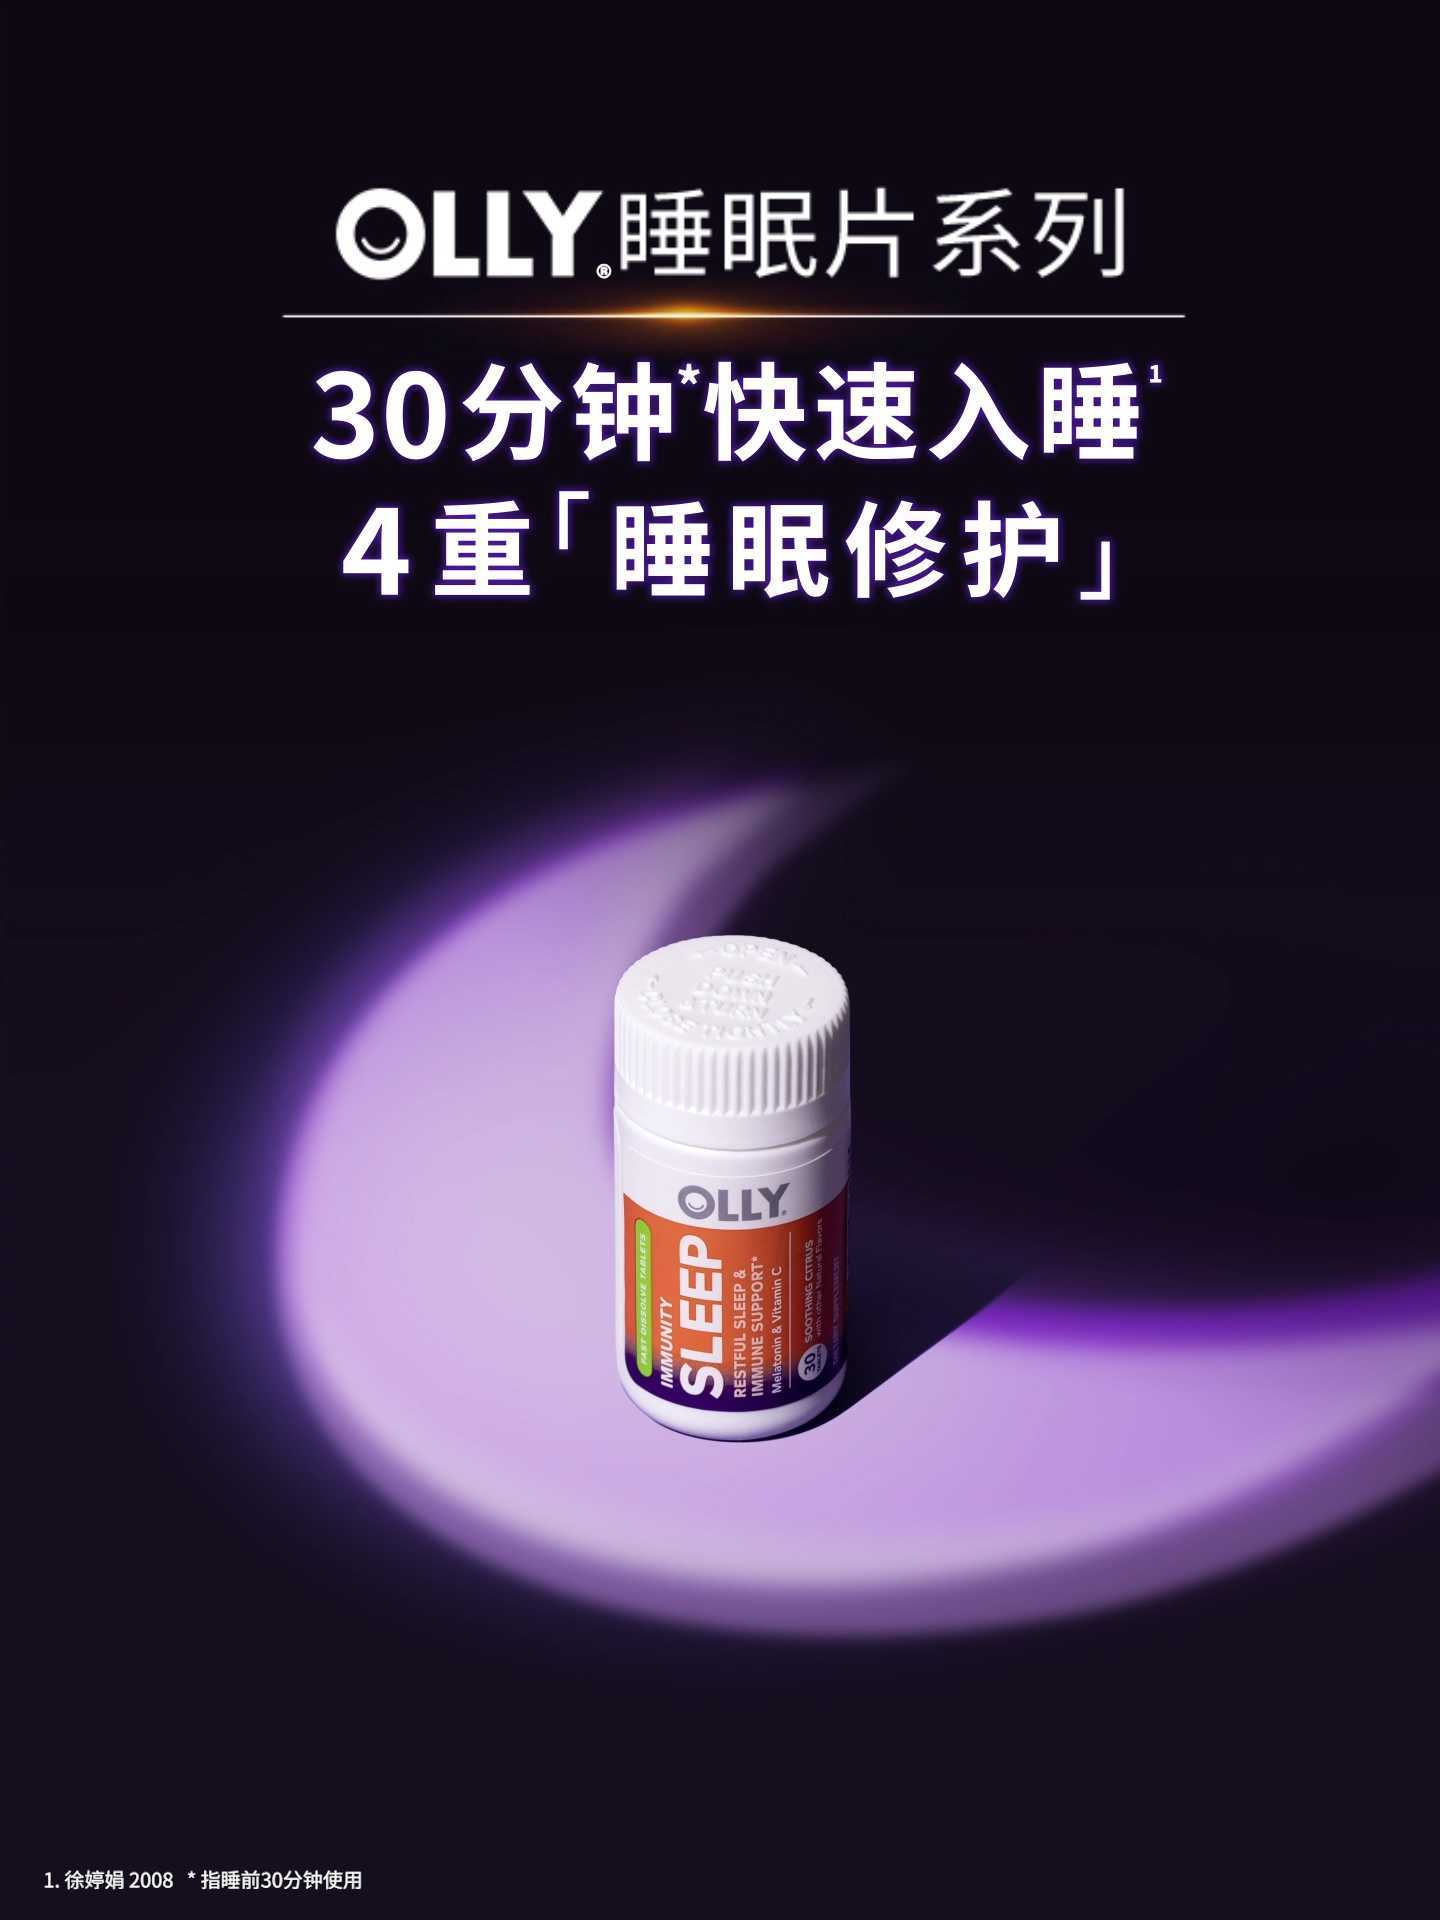 OLLY-China-Fast Dissolve Immunity Sleep